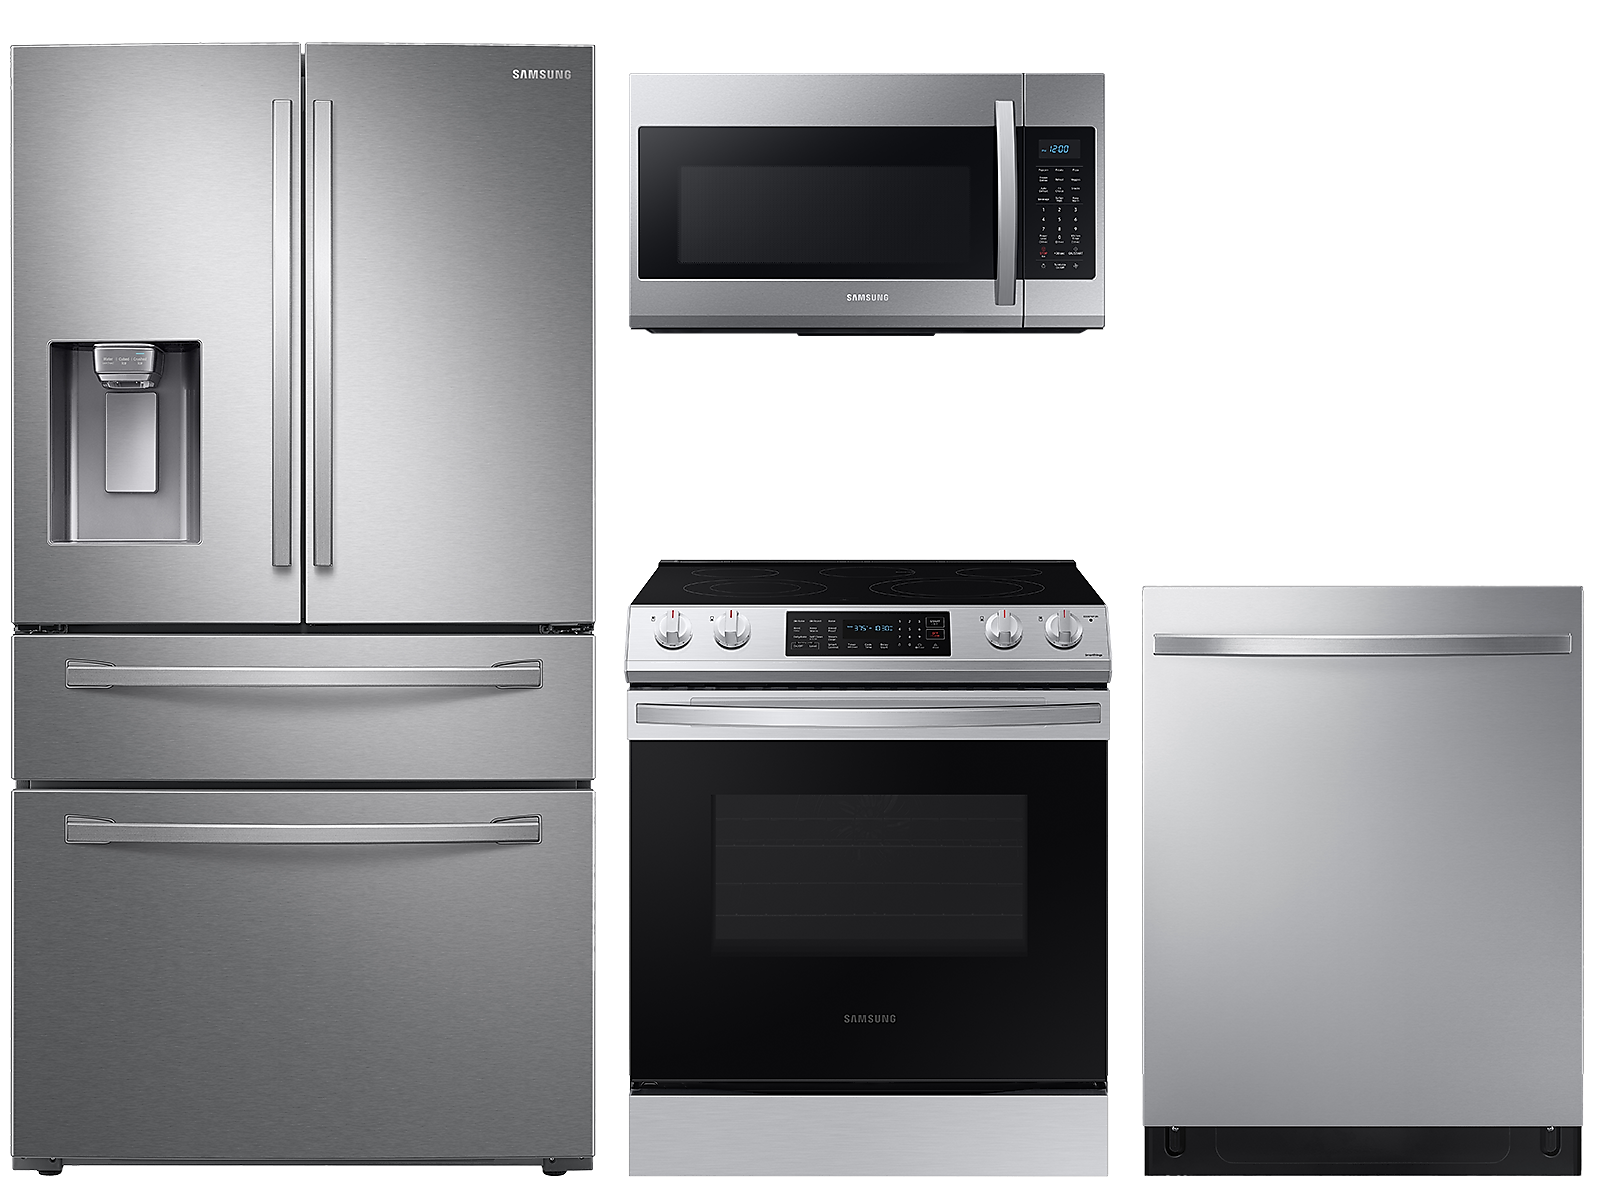 Samsung 23 cu. ft. counter depth 4-door refrigerator, 6.3 cu. ft. electric range, microwave and 48 dBA modern-look dishwasher package